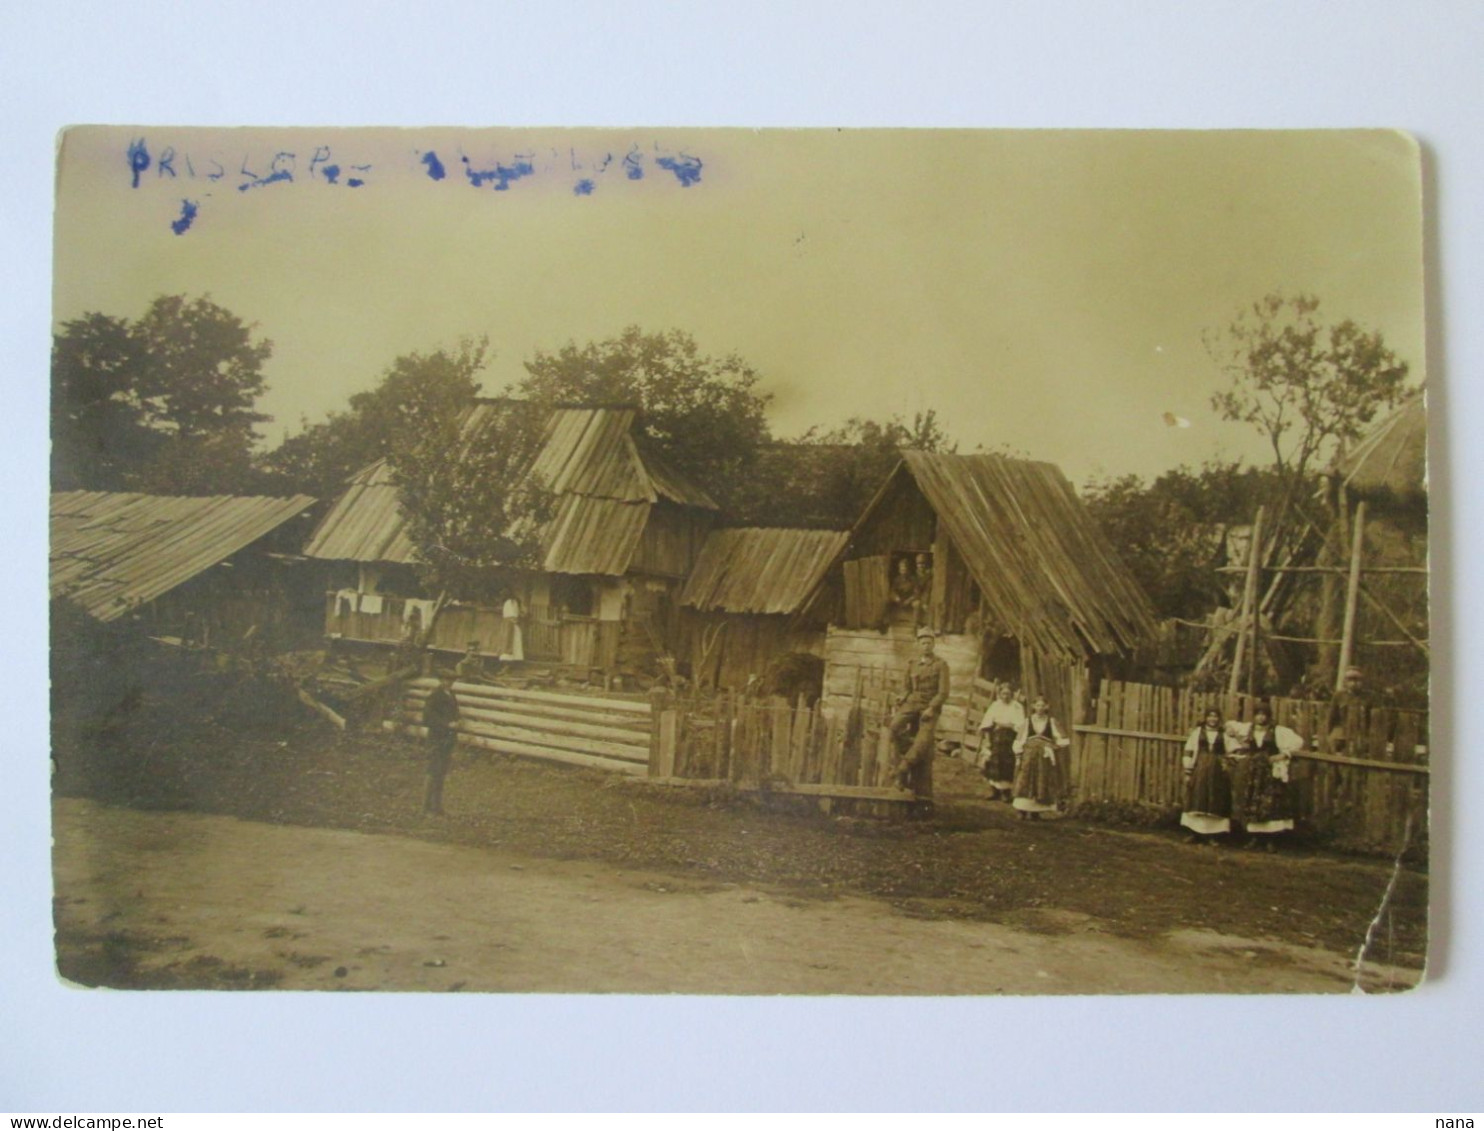 Slovakia-Village Carte Postale Photo 1931/Village In Slovakia Photo Postcard From 1931 - Slovacchia